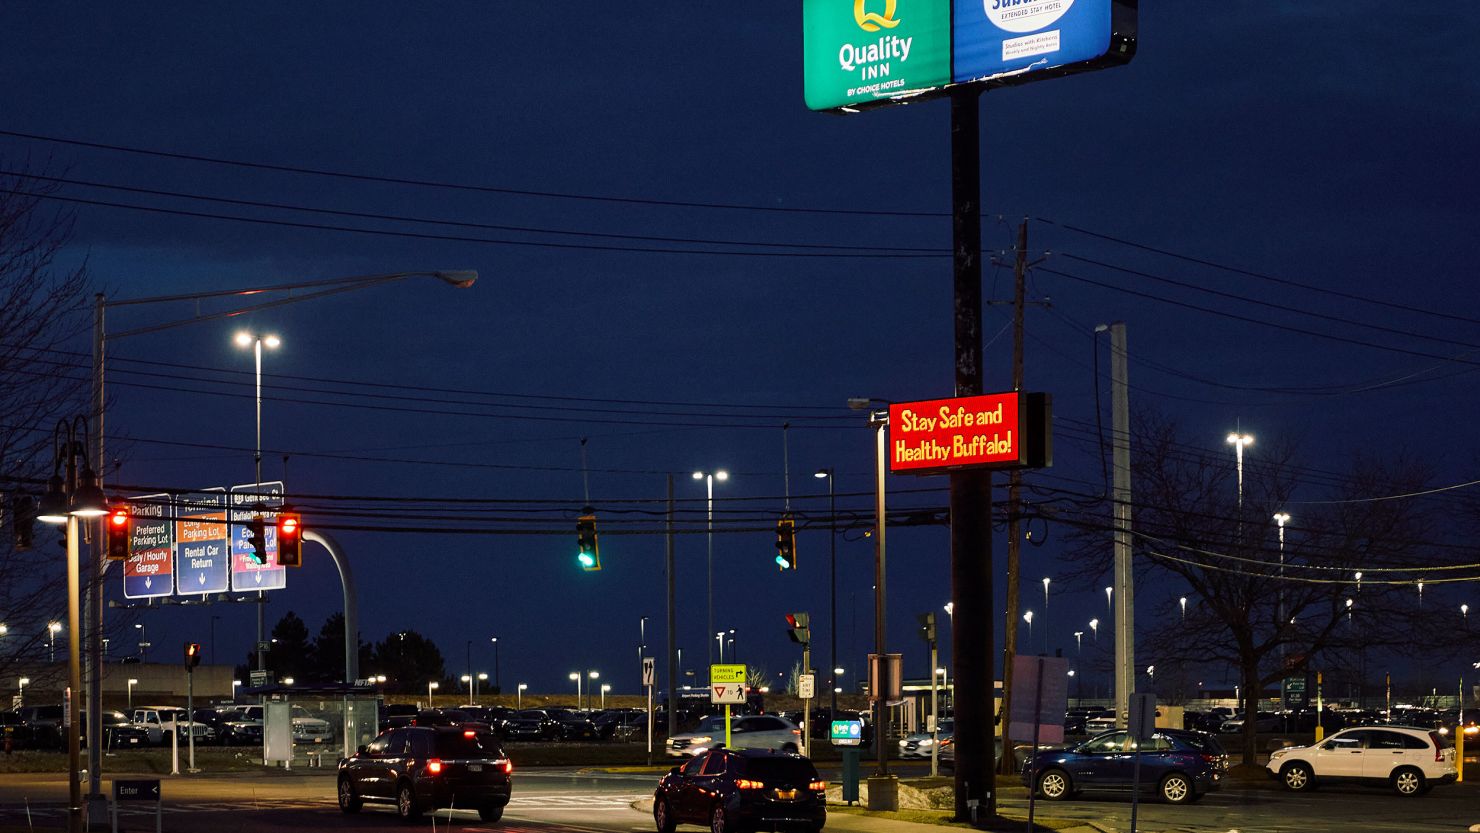 The Quality Inn, near the Buffalo Niagara International Airport in New York, is seen on February 7.